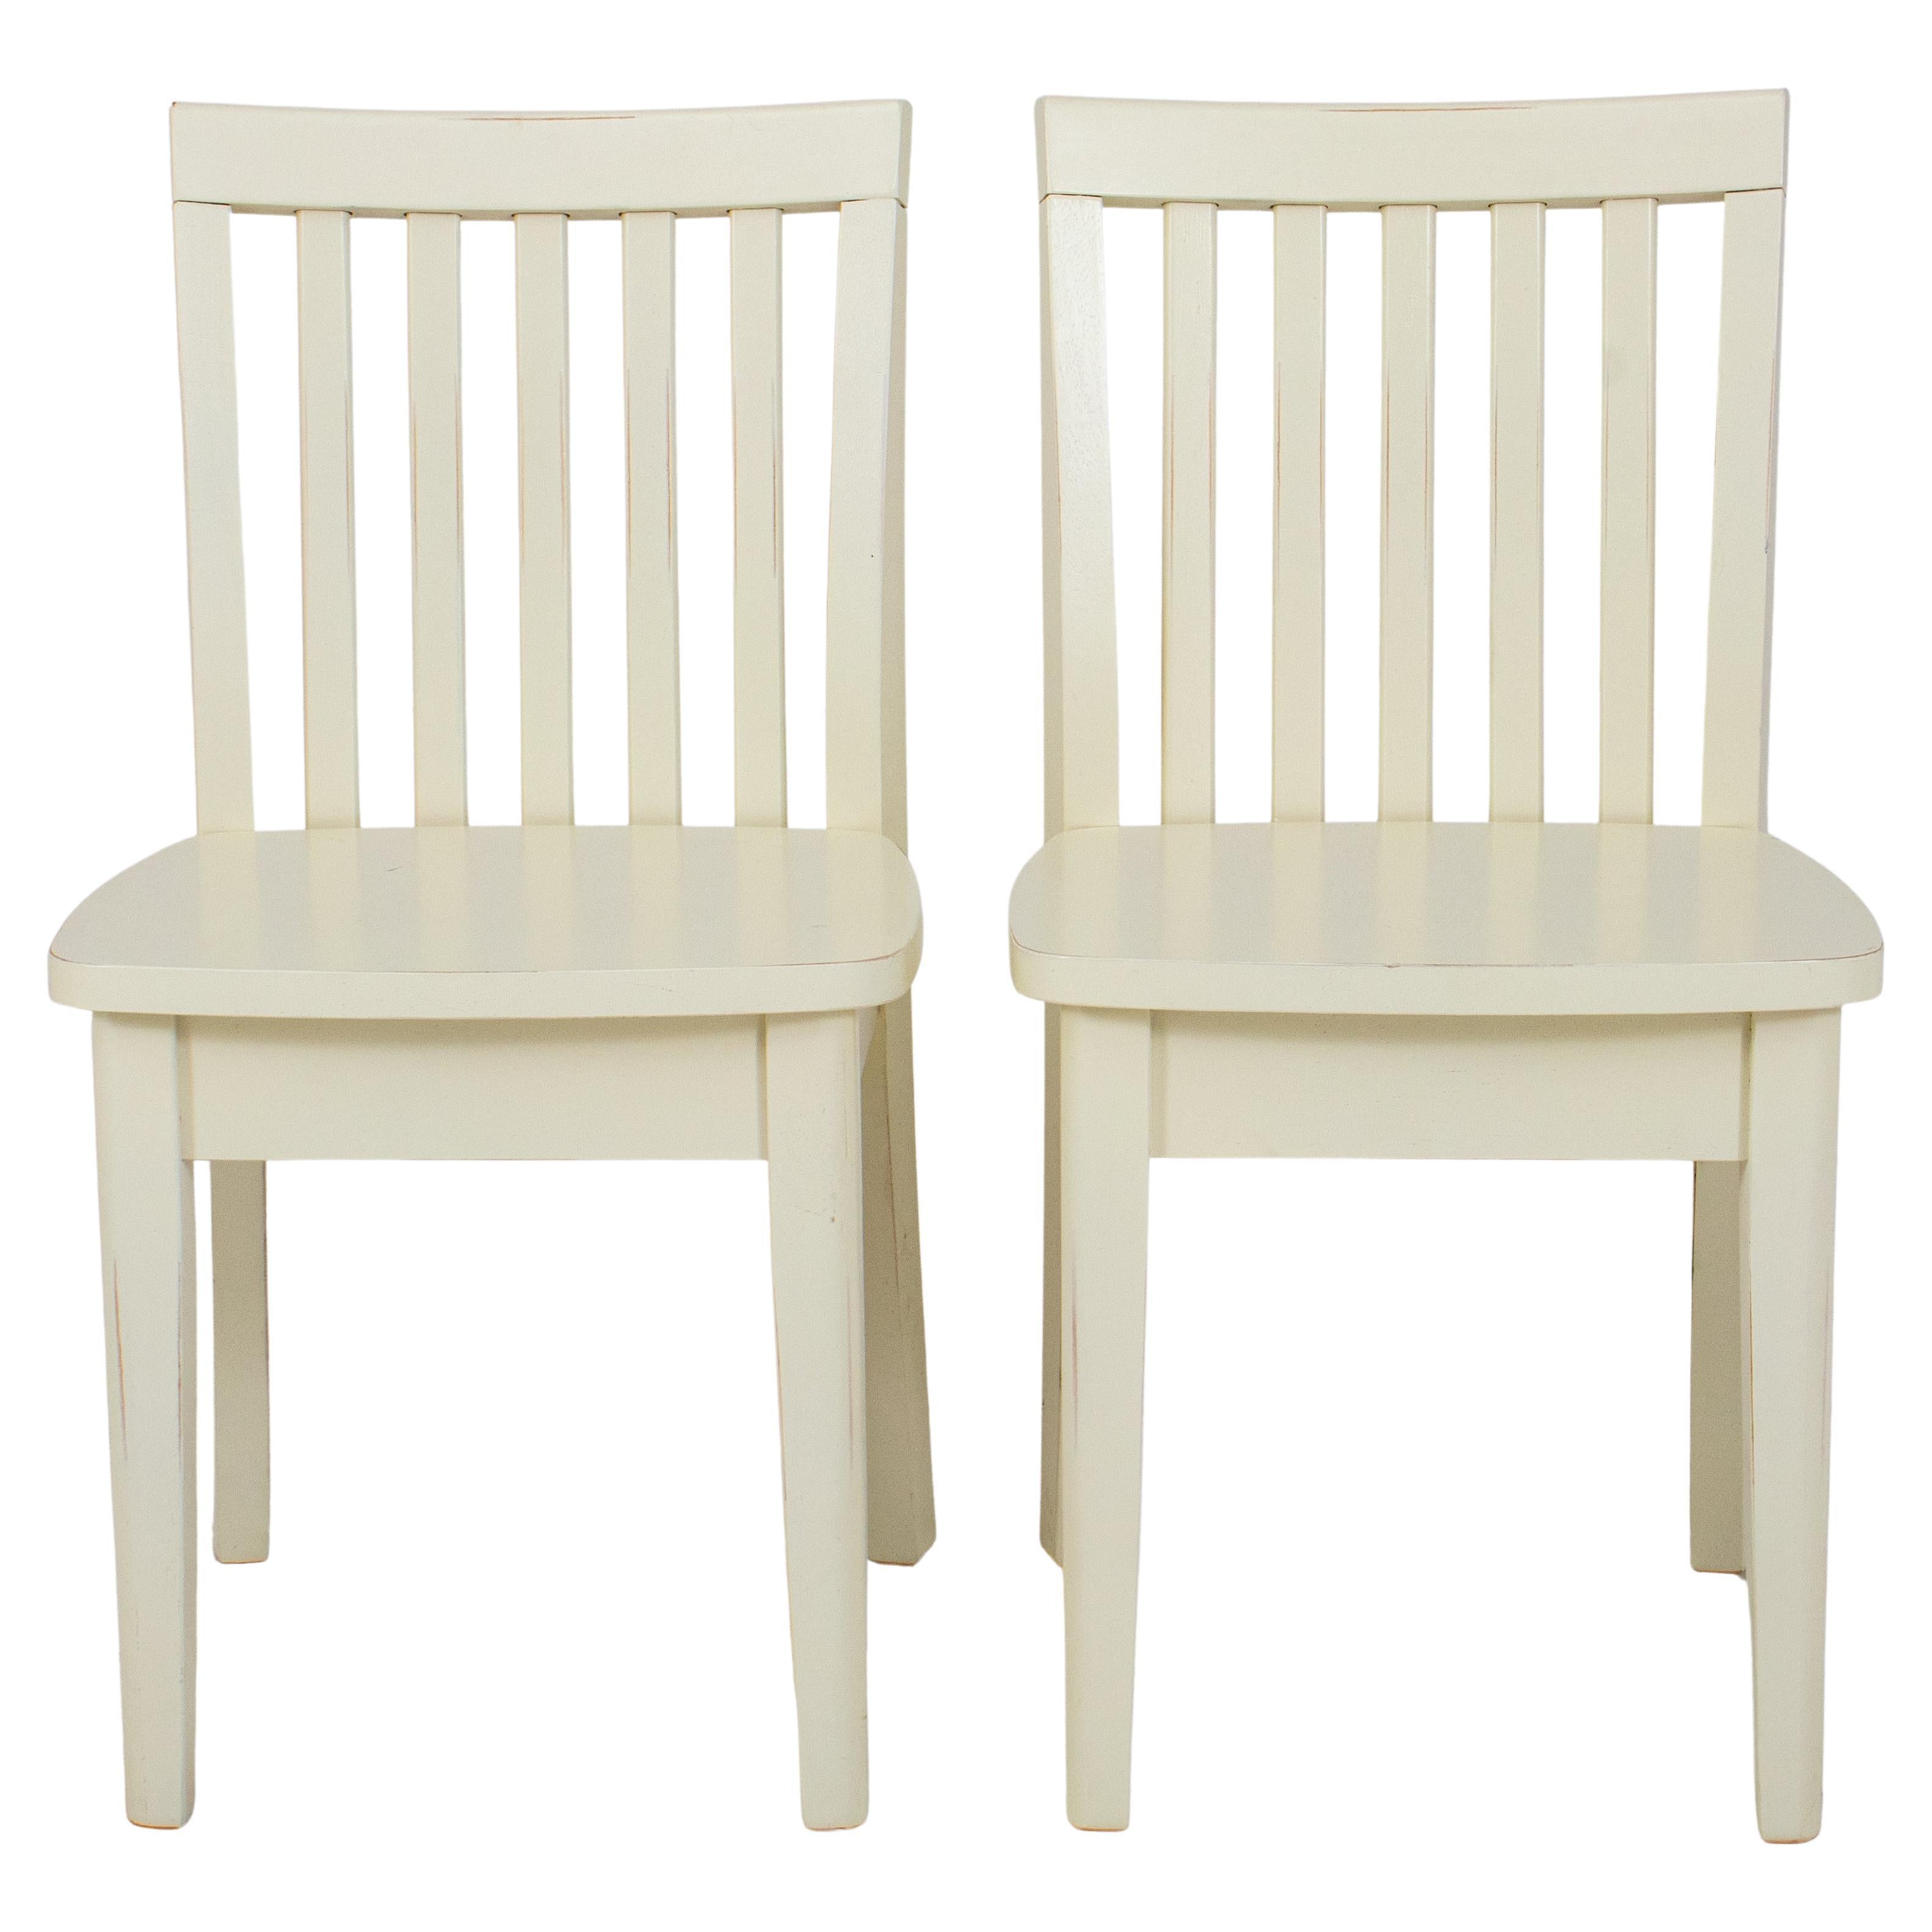 White-Painted Children's Chairs